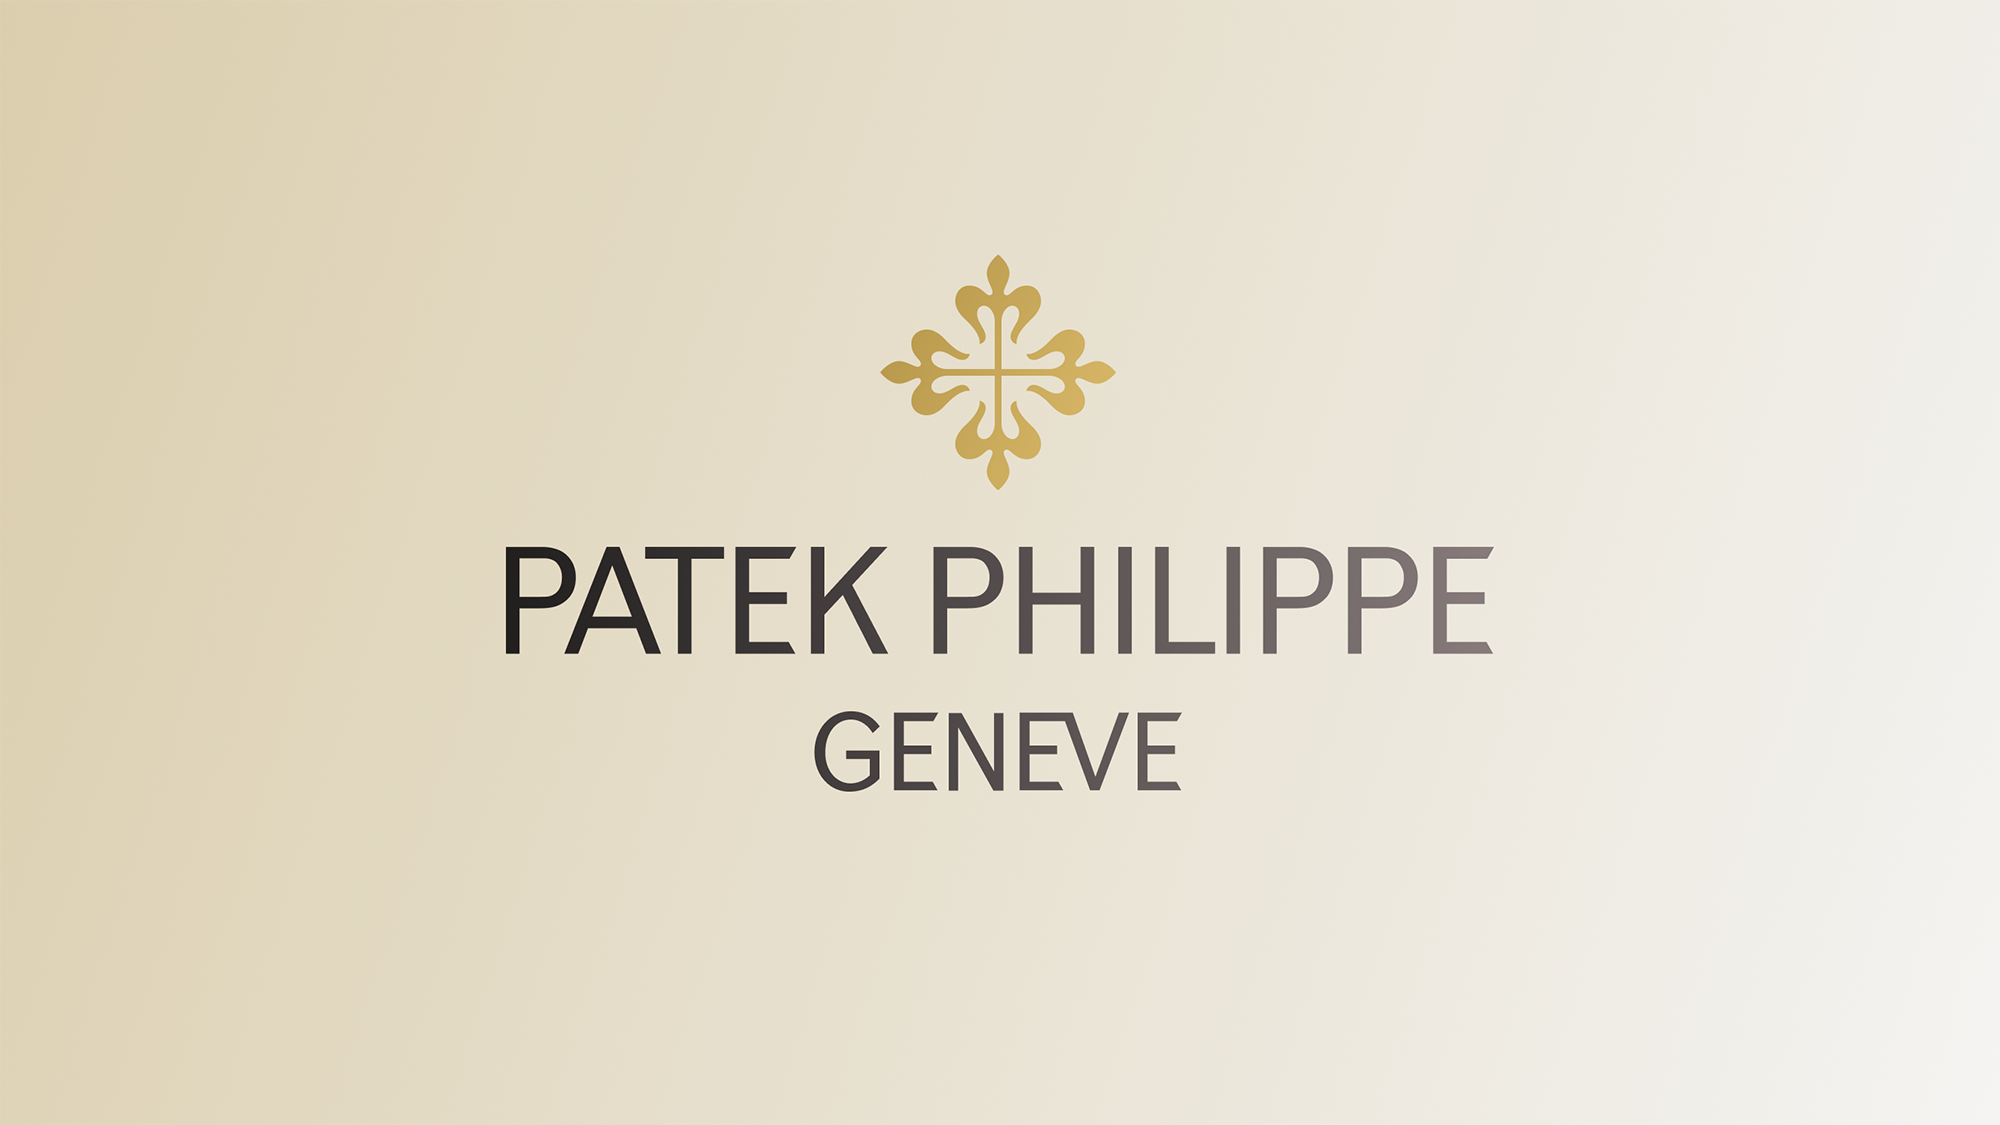 The watch manufacturer Patek Philippe of Geneve, Switzerland